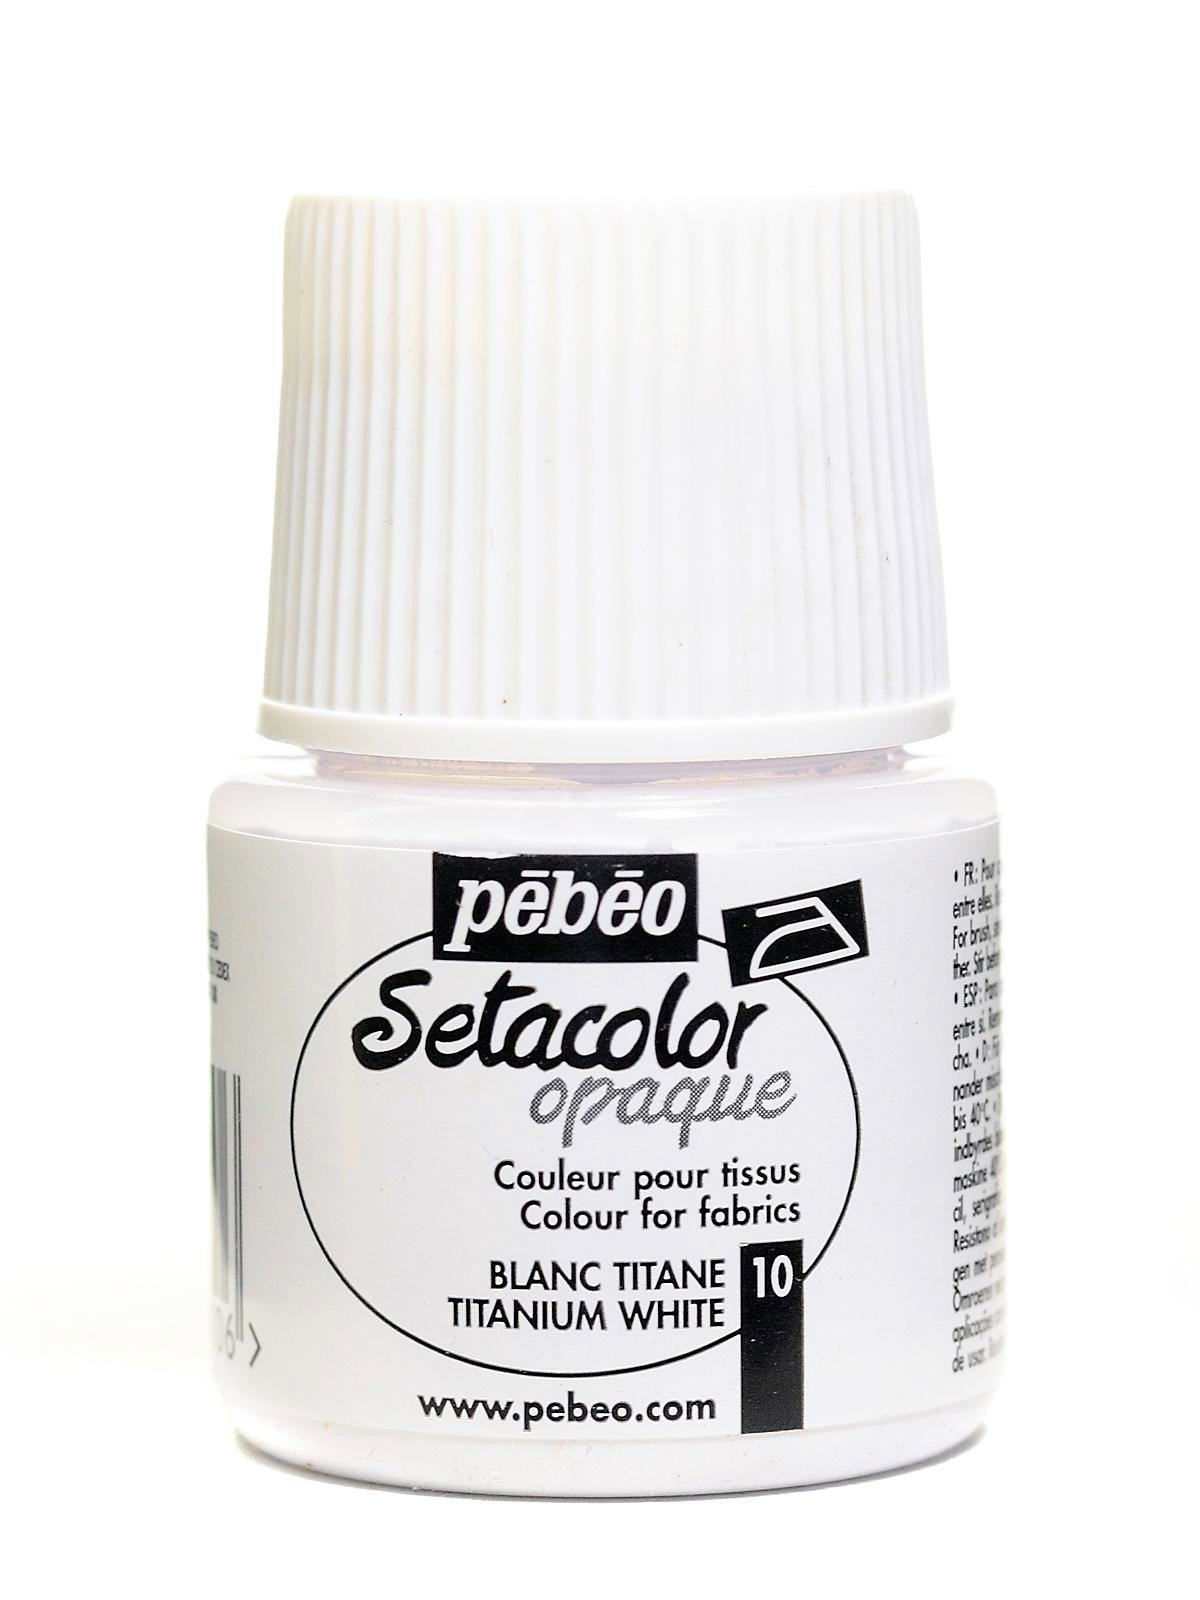  Pebeo Setacolor Opaque Fabric Paint 1-Liter Bottle, White